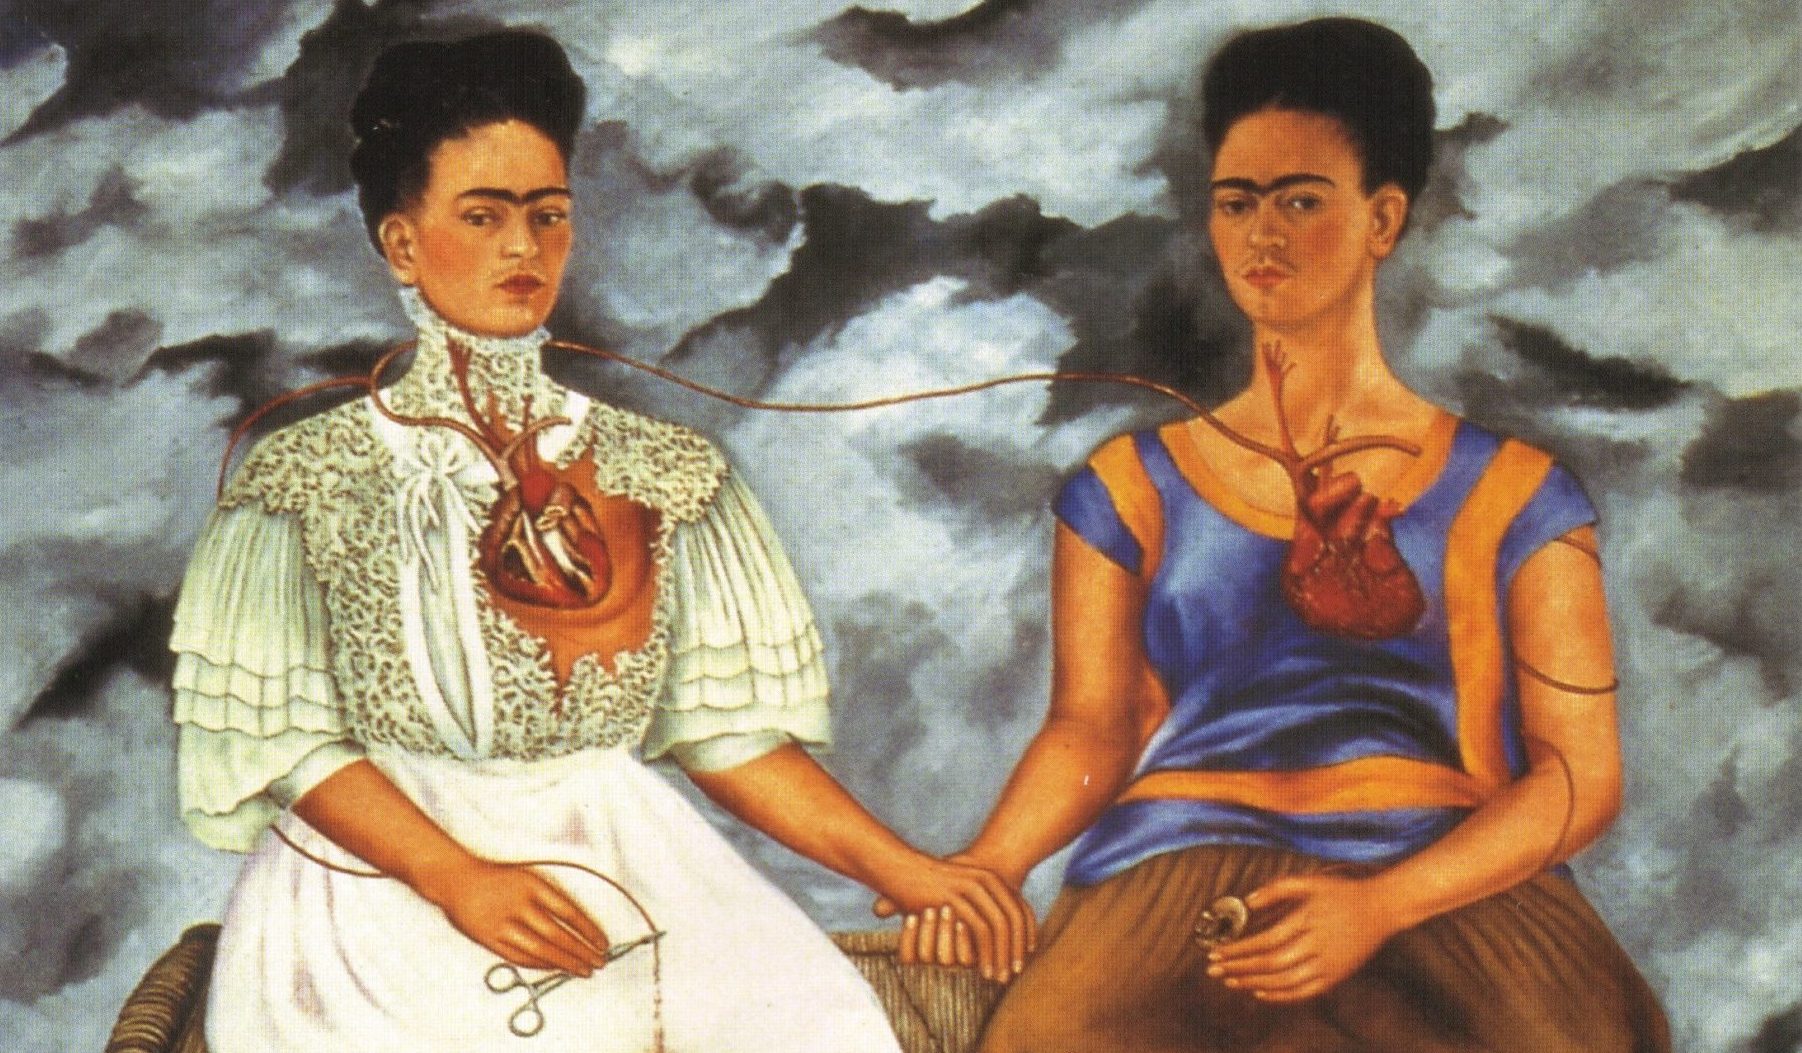 Paris Exhibit Shows How Frida Kahlo Built Her Identity Through Fashion